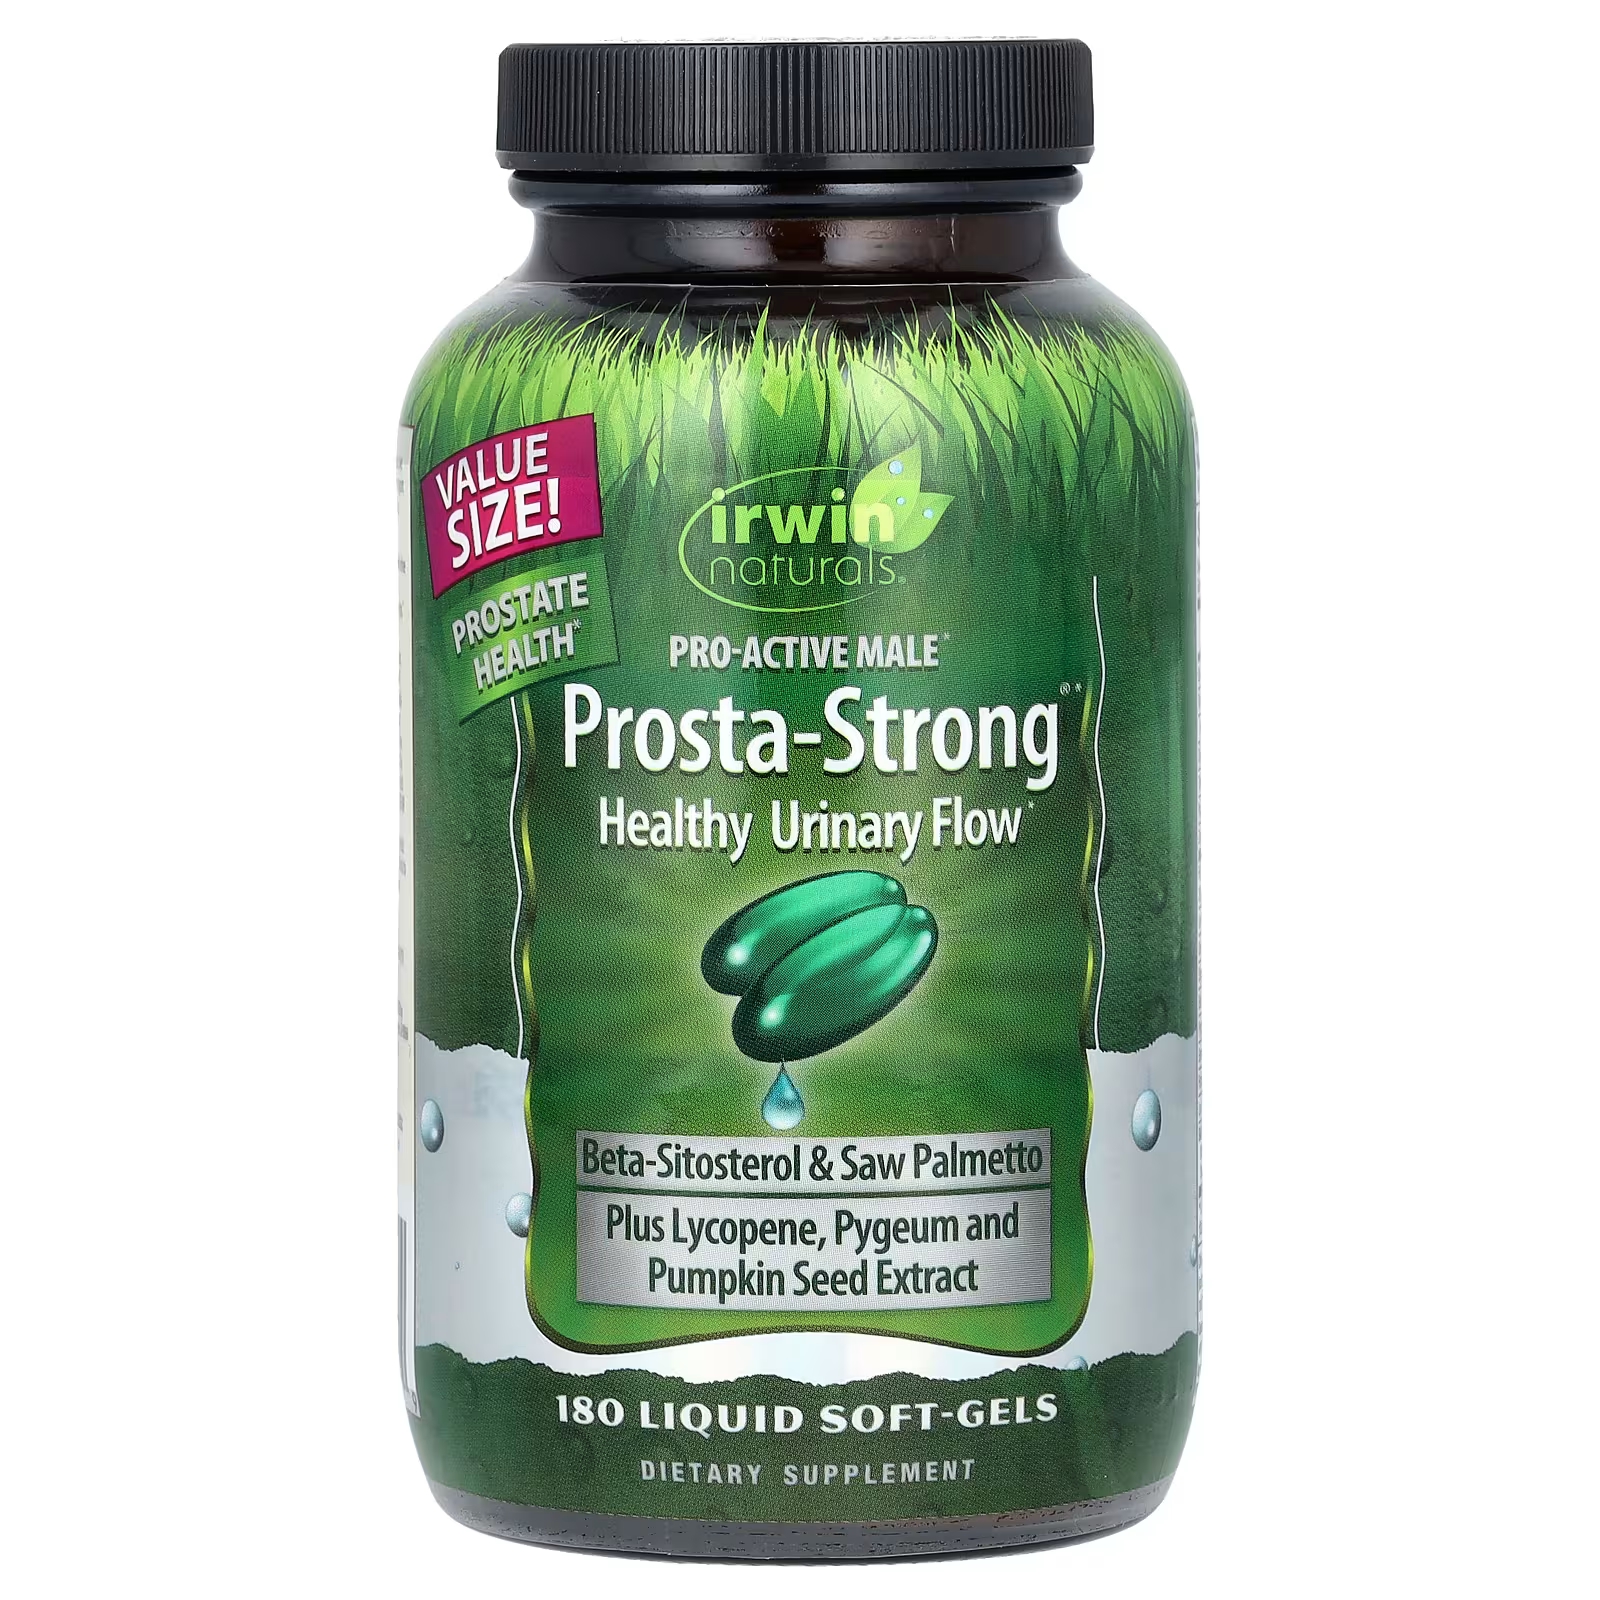 Пищевая добавка Irwin Naturals Pro-Active Male Prosta-Strong Healthy Urinary Flow, 180 жидких мягких капсул